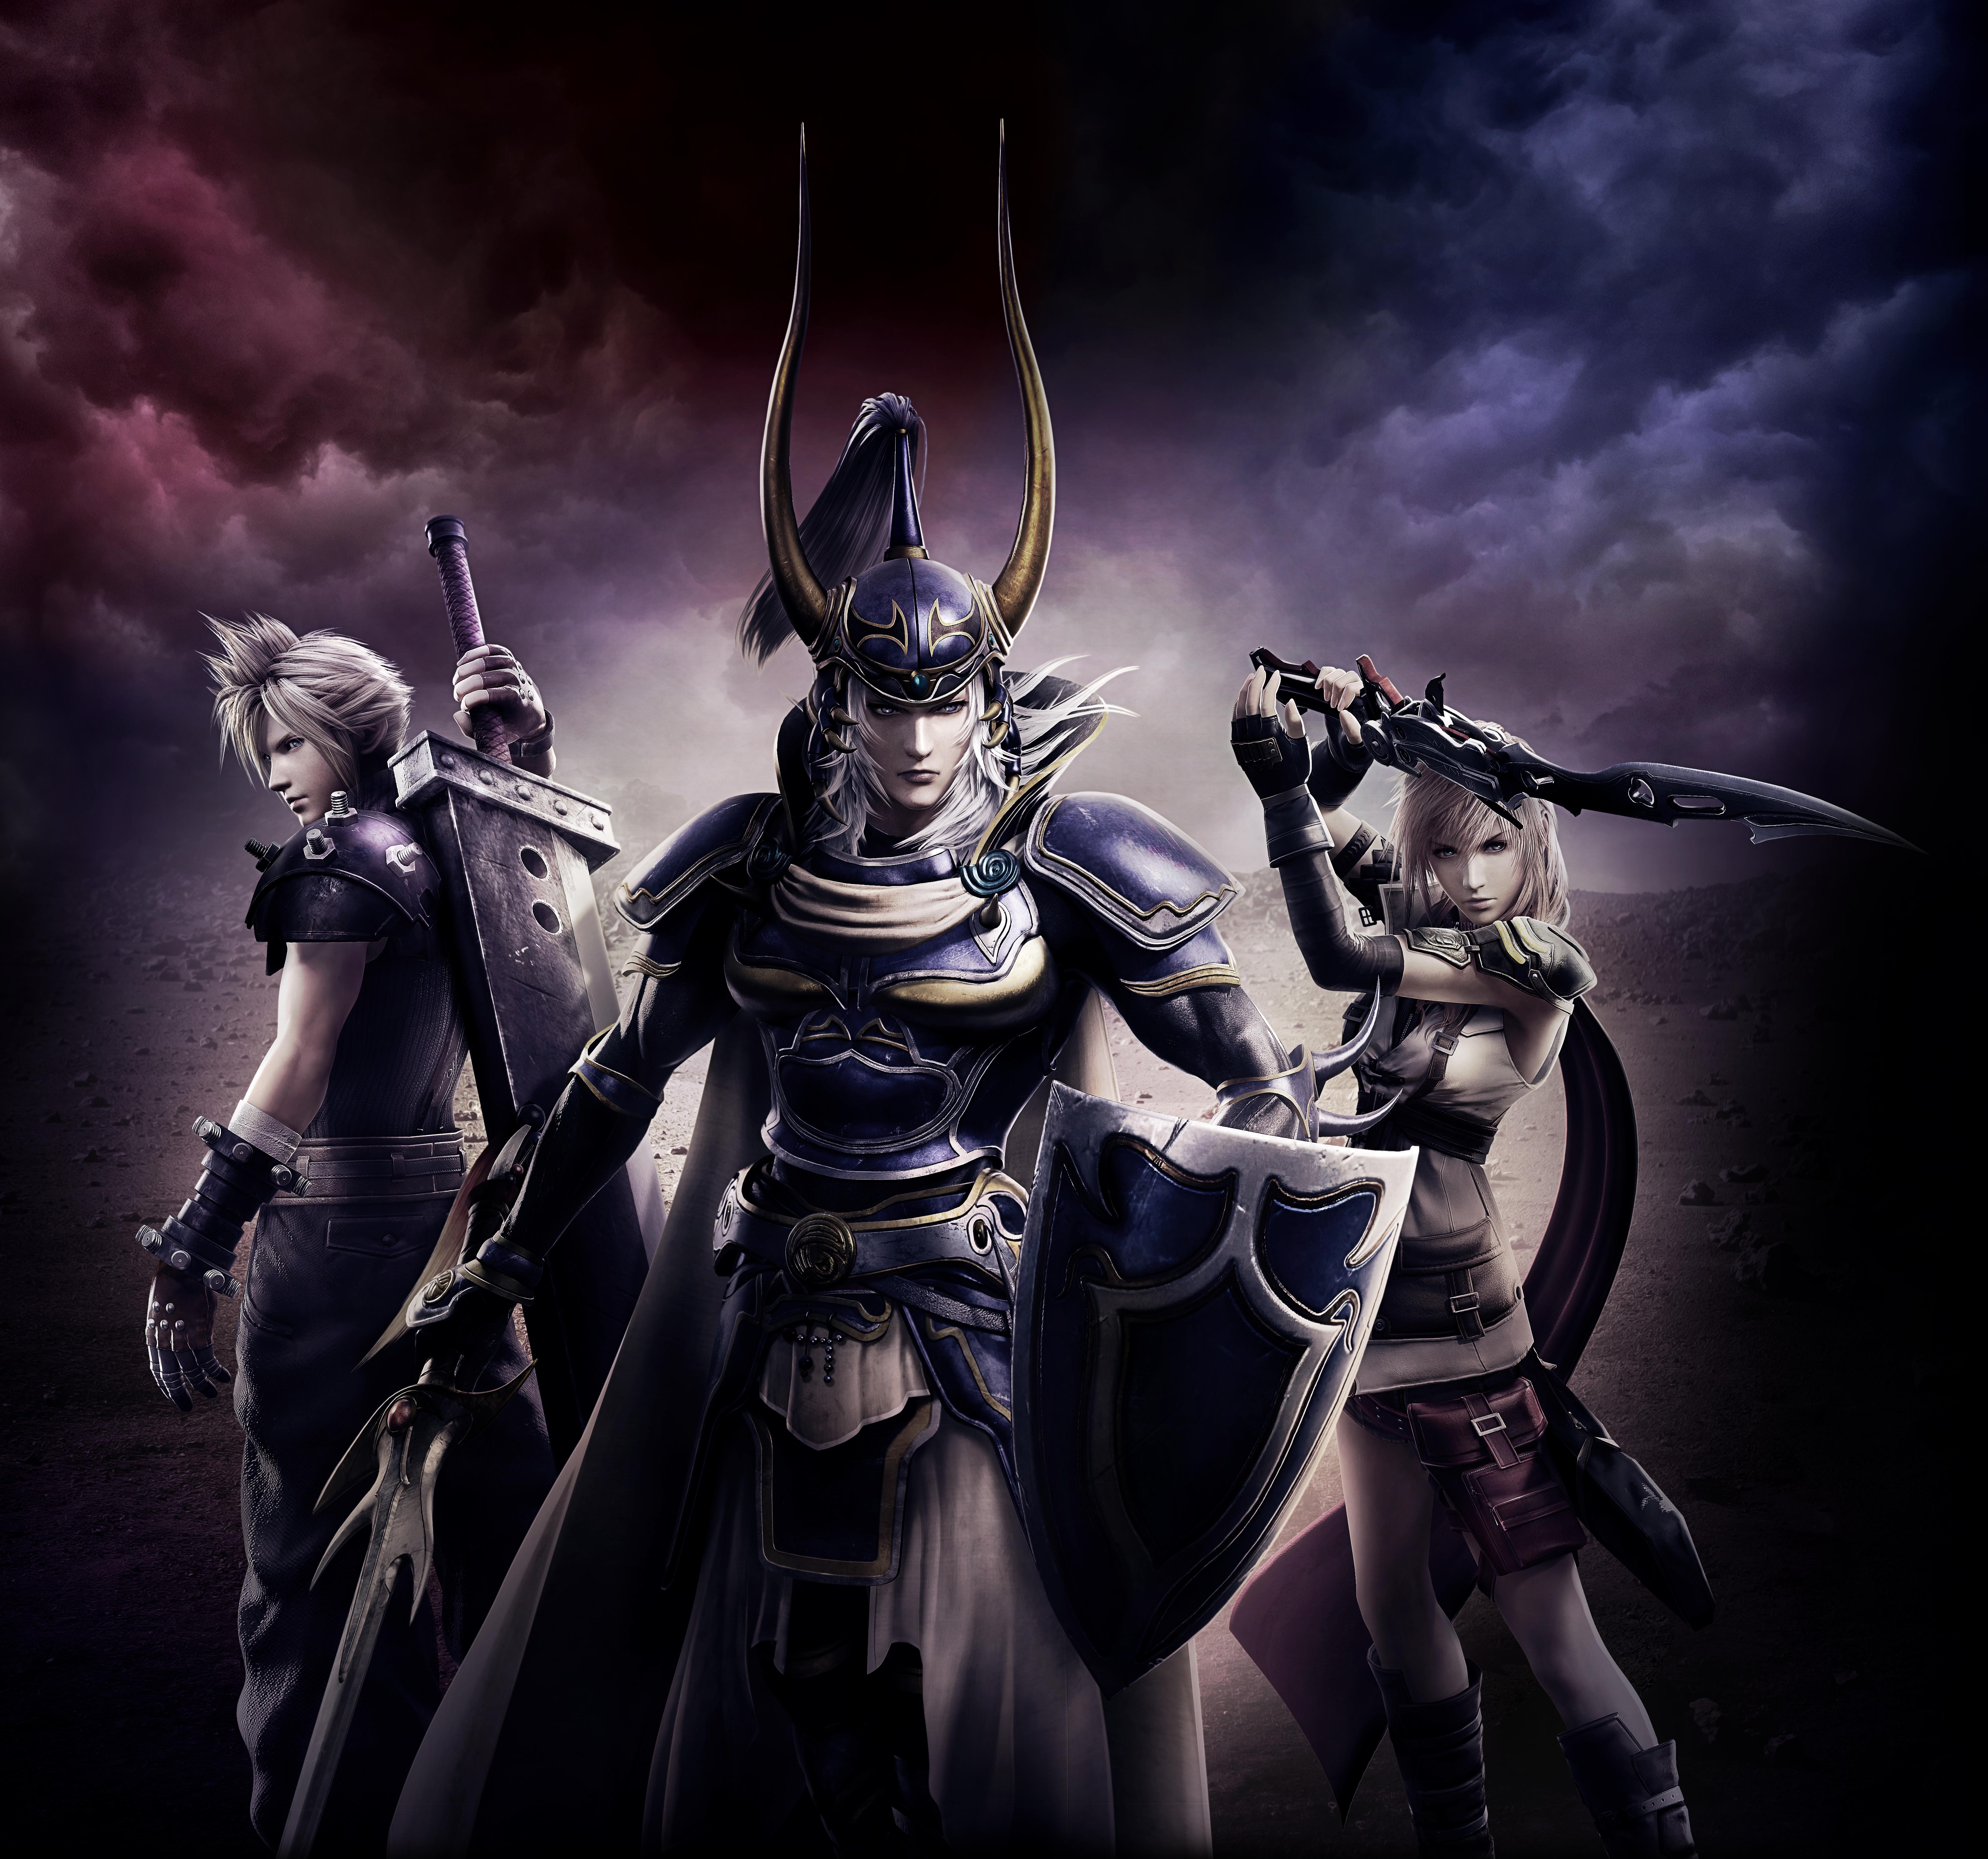 Dissidia Final Fantasy NT Boxart Artwork